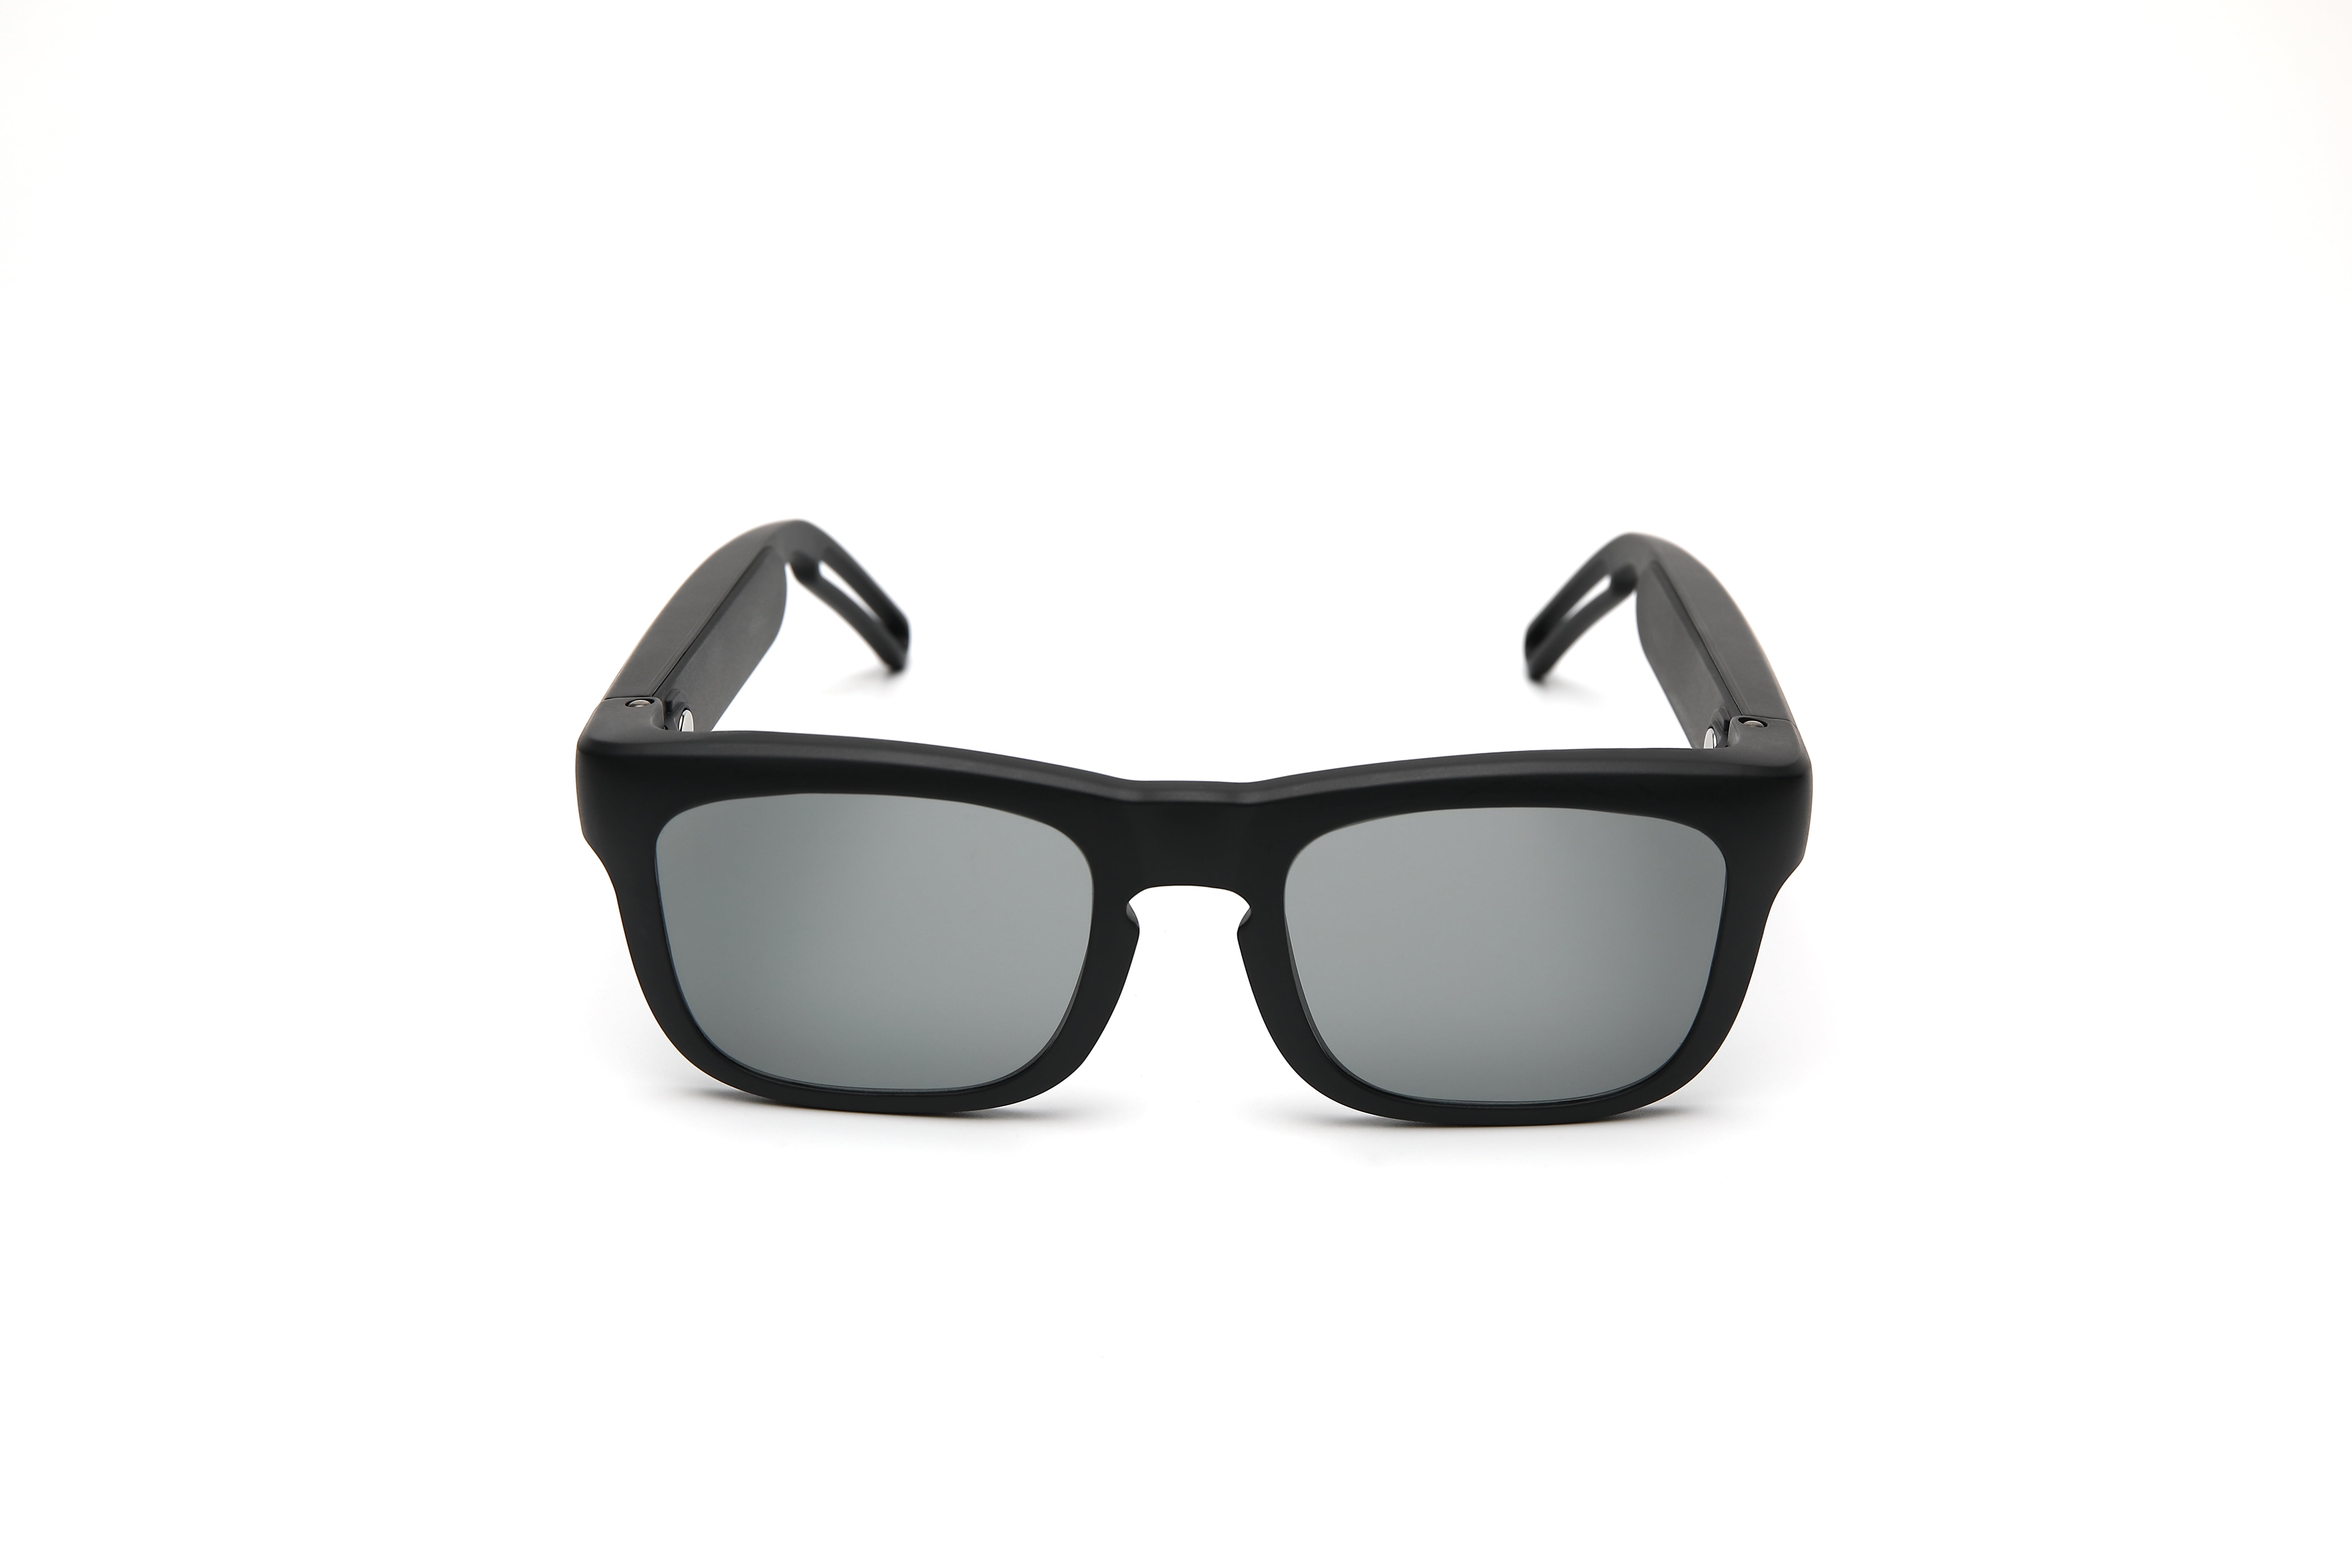 Mutrics Smart Audio Sunglasses Streaming Audio Via Bluetooth 5.0 